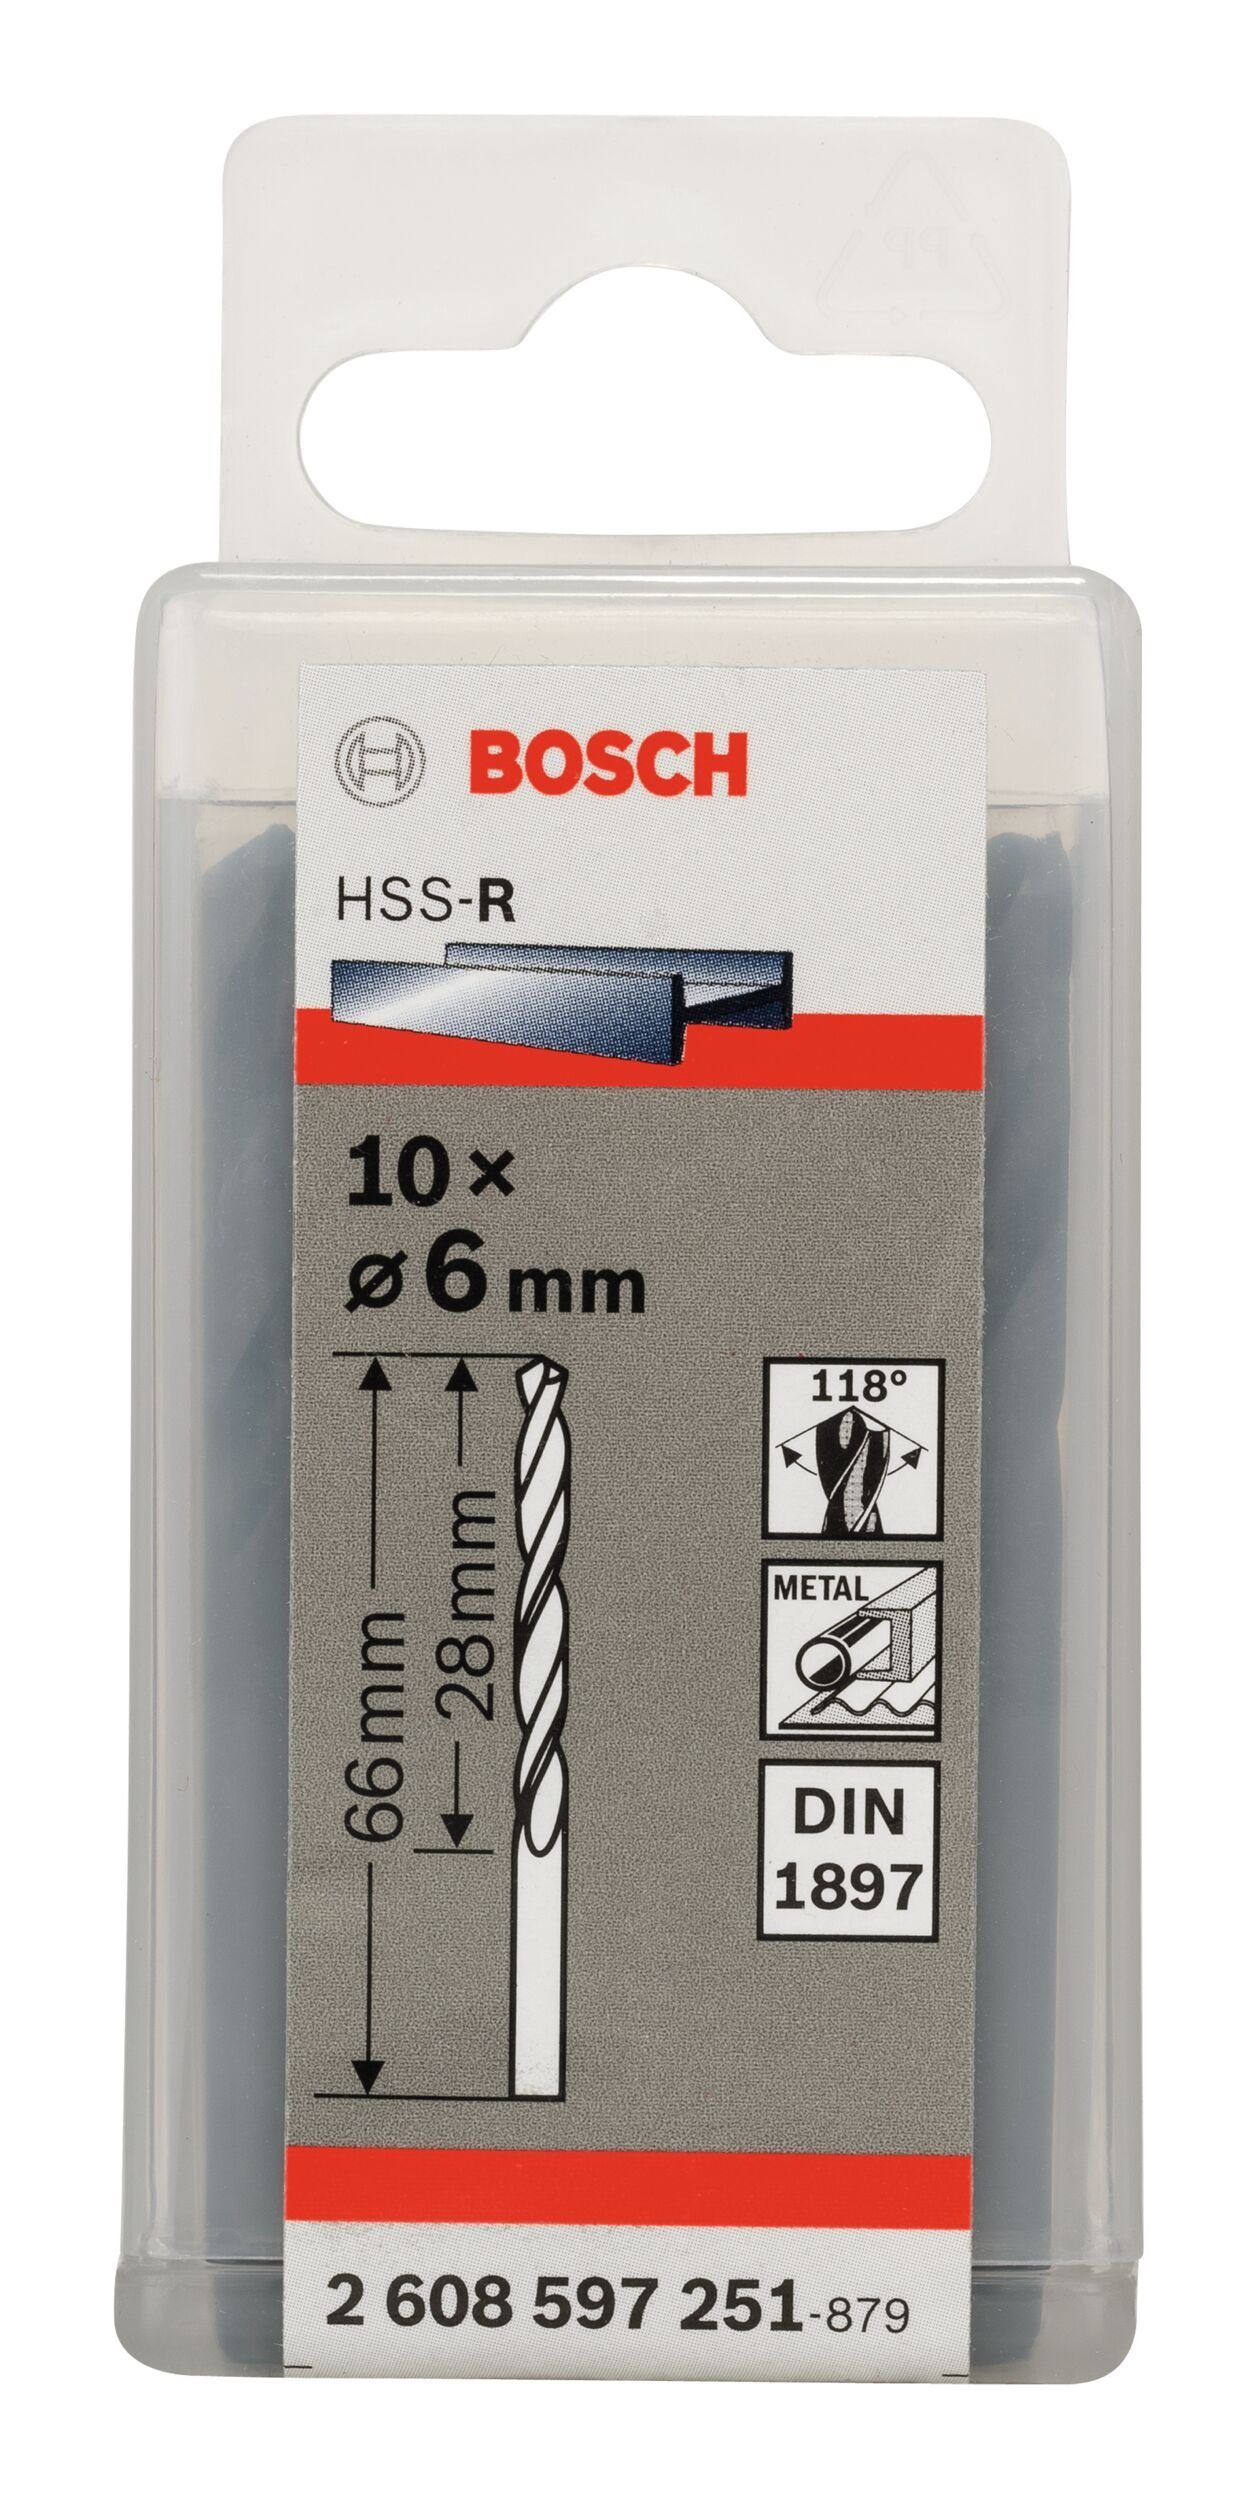 BOSCH (DIN x - mm 1897) x Karosseriebohrer 28 10er-Pack HSS-R 66 (10 Stück), - 6 Metallbohrer,